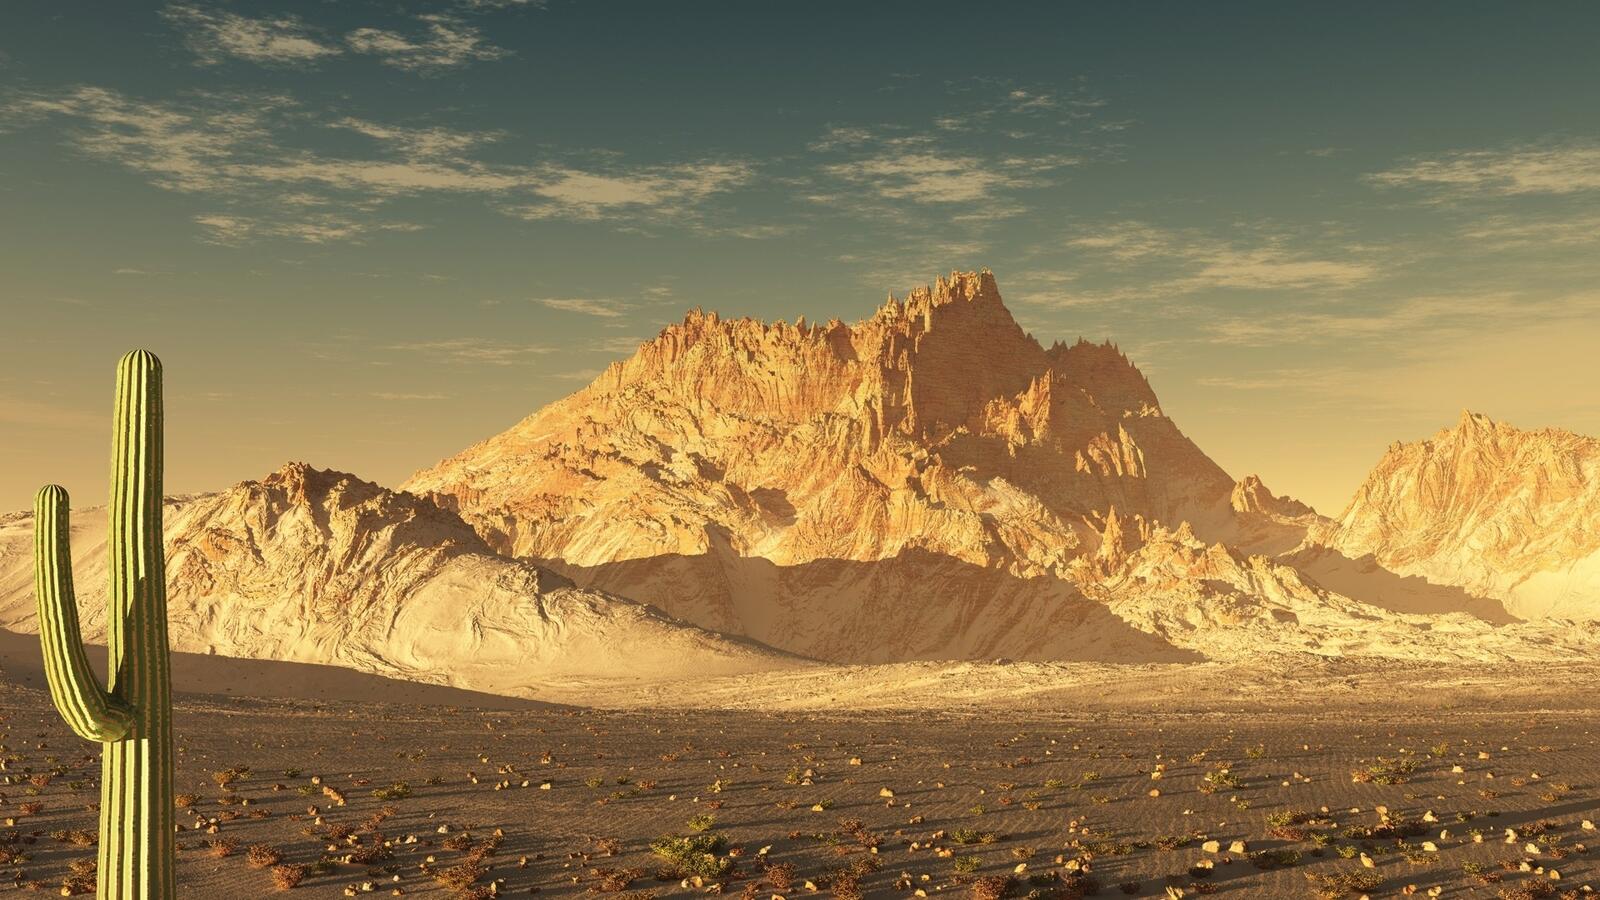 Wallpapers desert mountain nature on the desktop